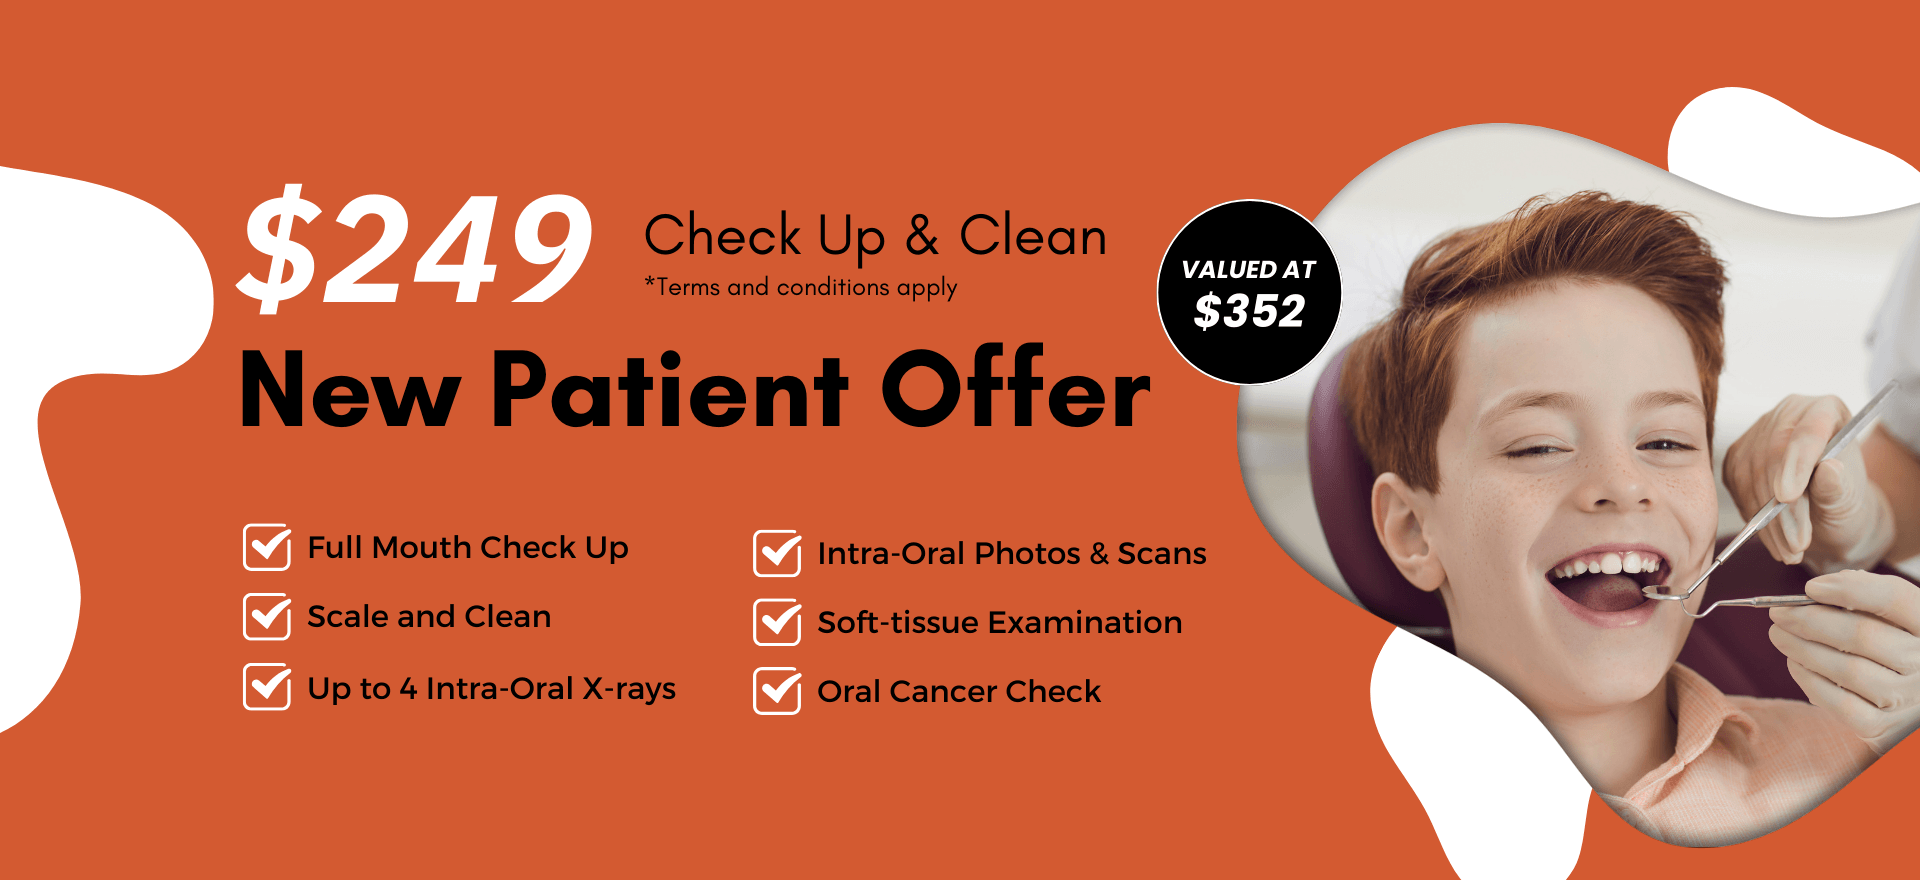 Patient Offer Image